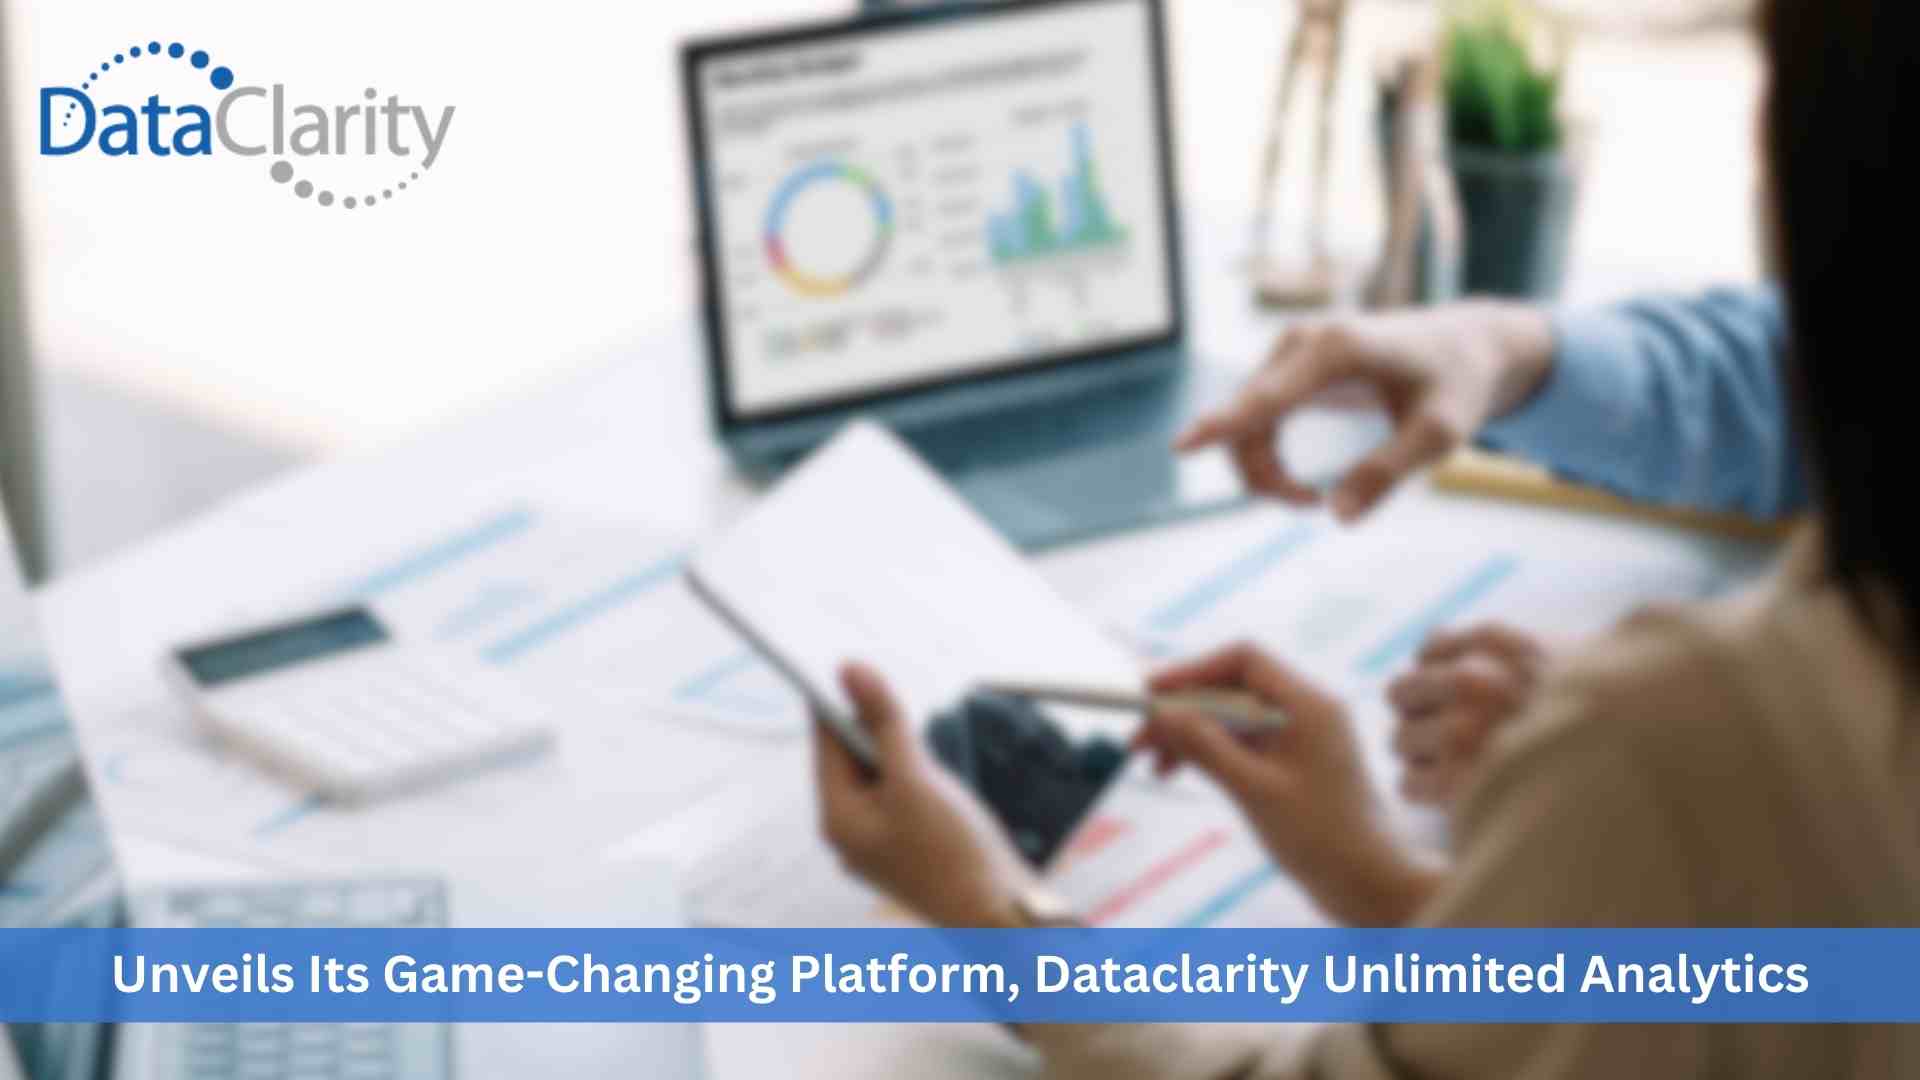 DataClarity Revolutionizes Analytics Landscape with World's Only Free Self-Service Embeddable Platform